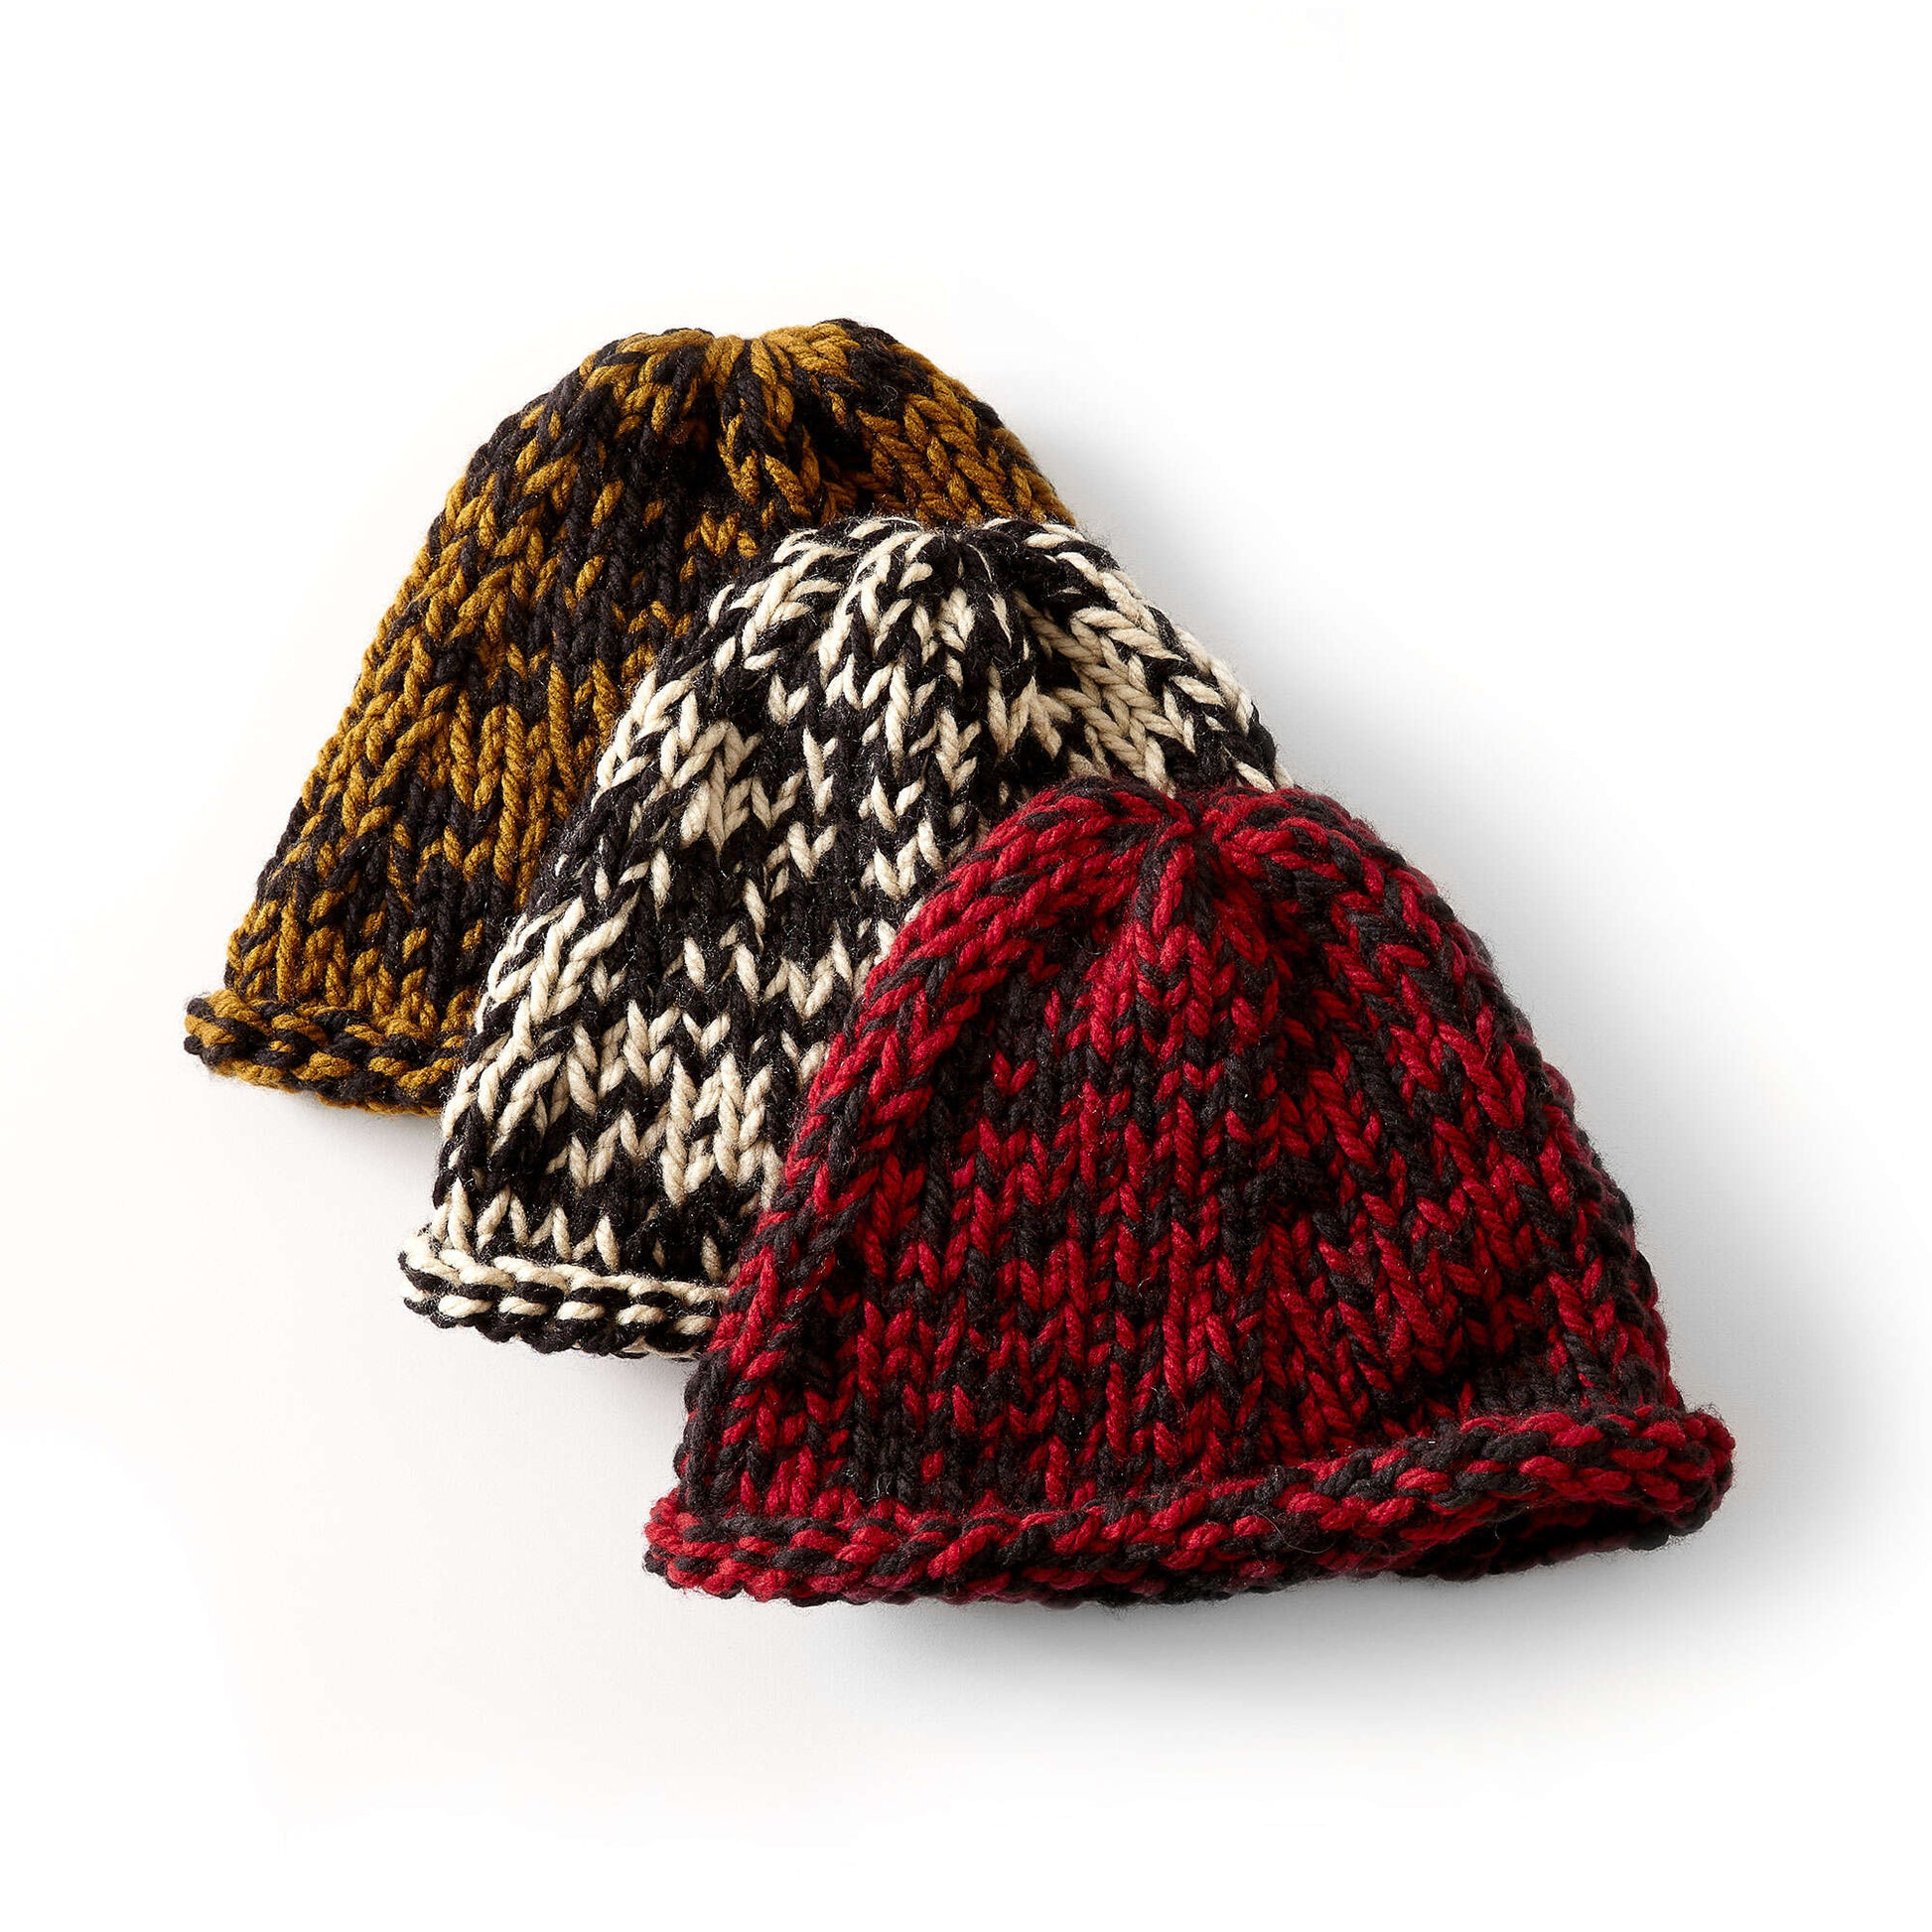 Bernat Raised Beanie Knit Hat made in Bernat Softee Chunky yarn